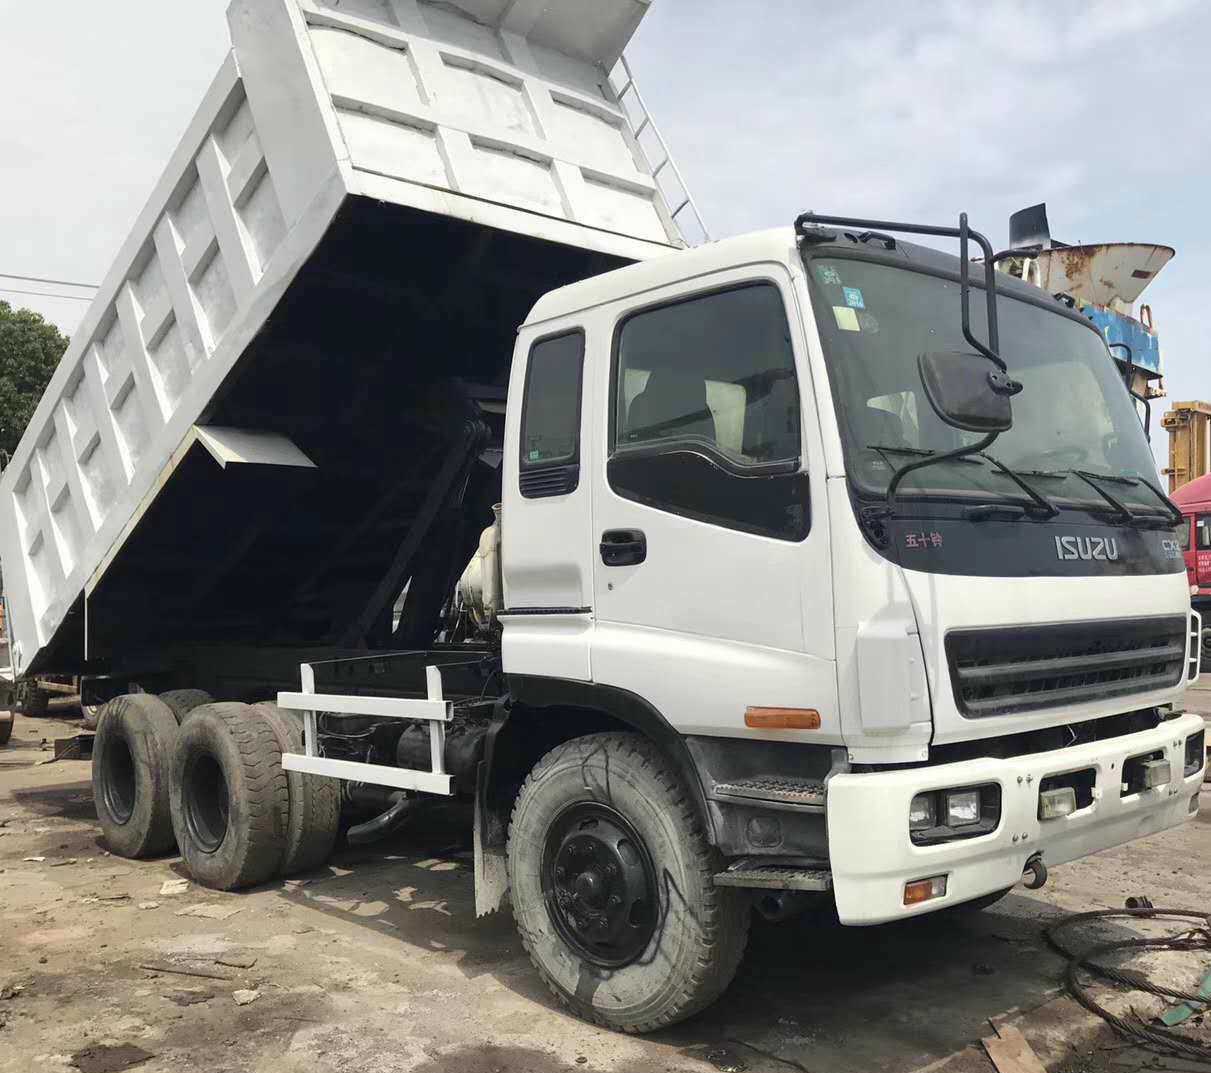 Used Isuzu Dump Truck in Very New Good Condition